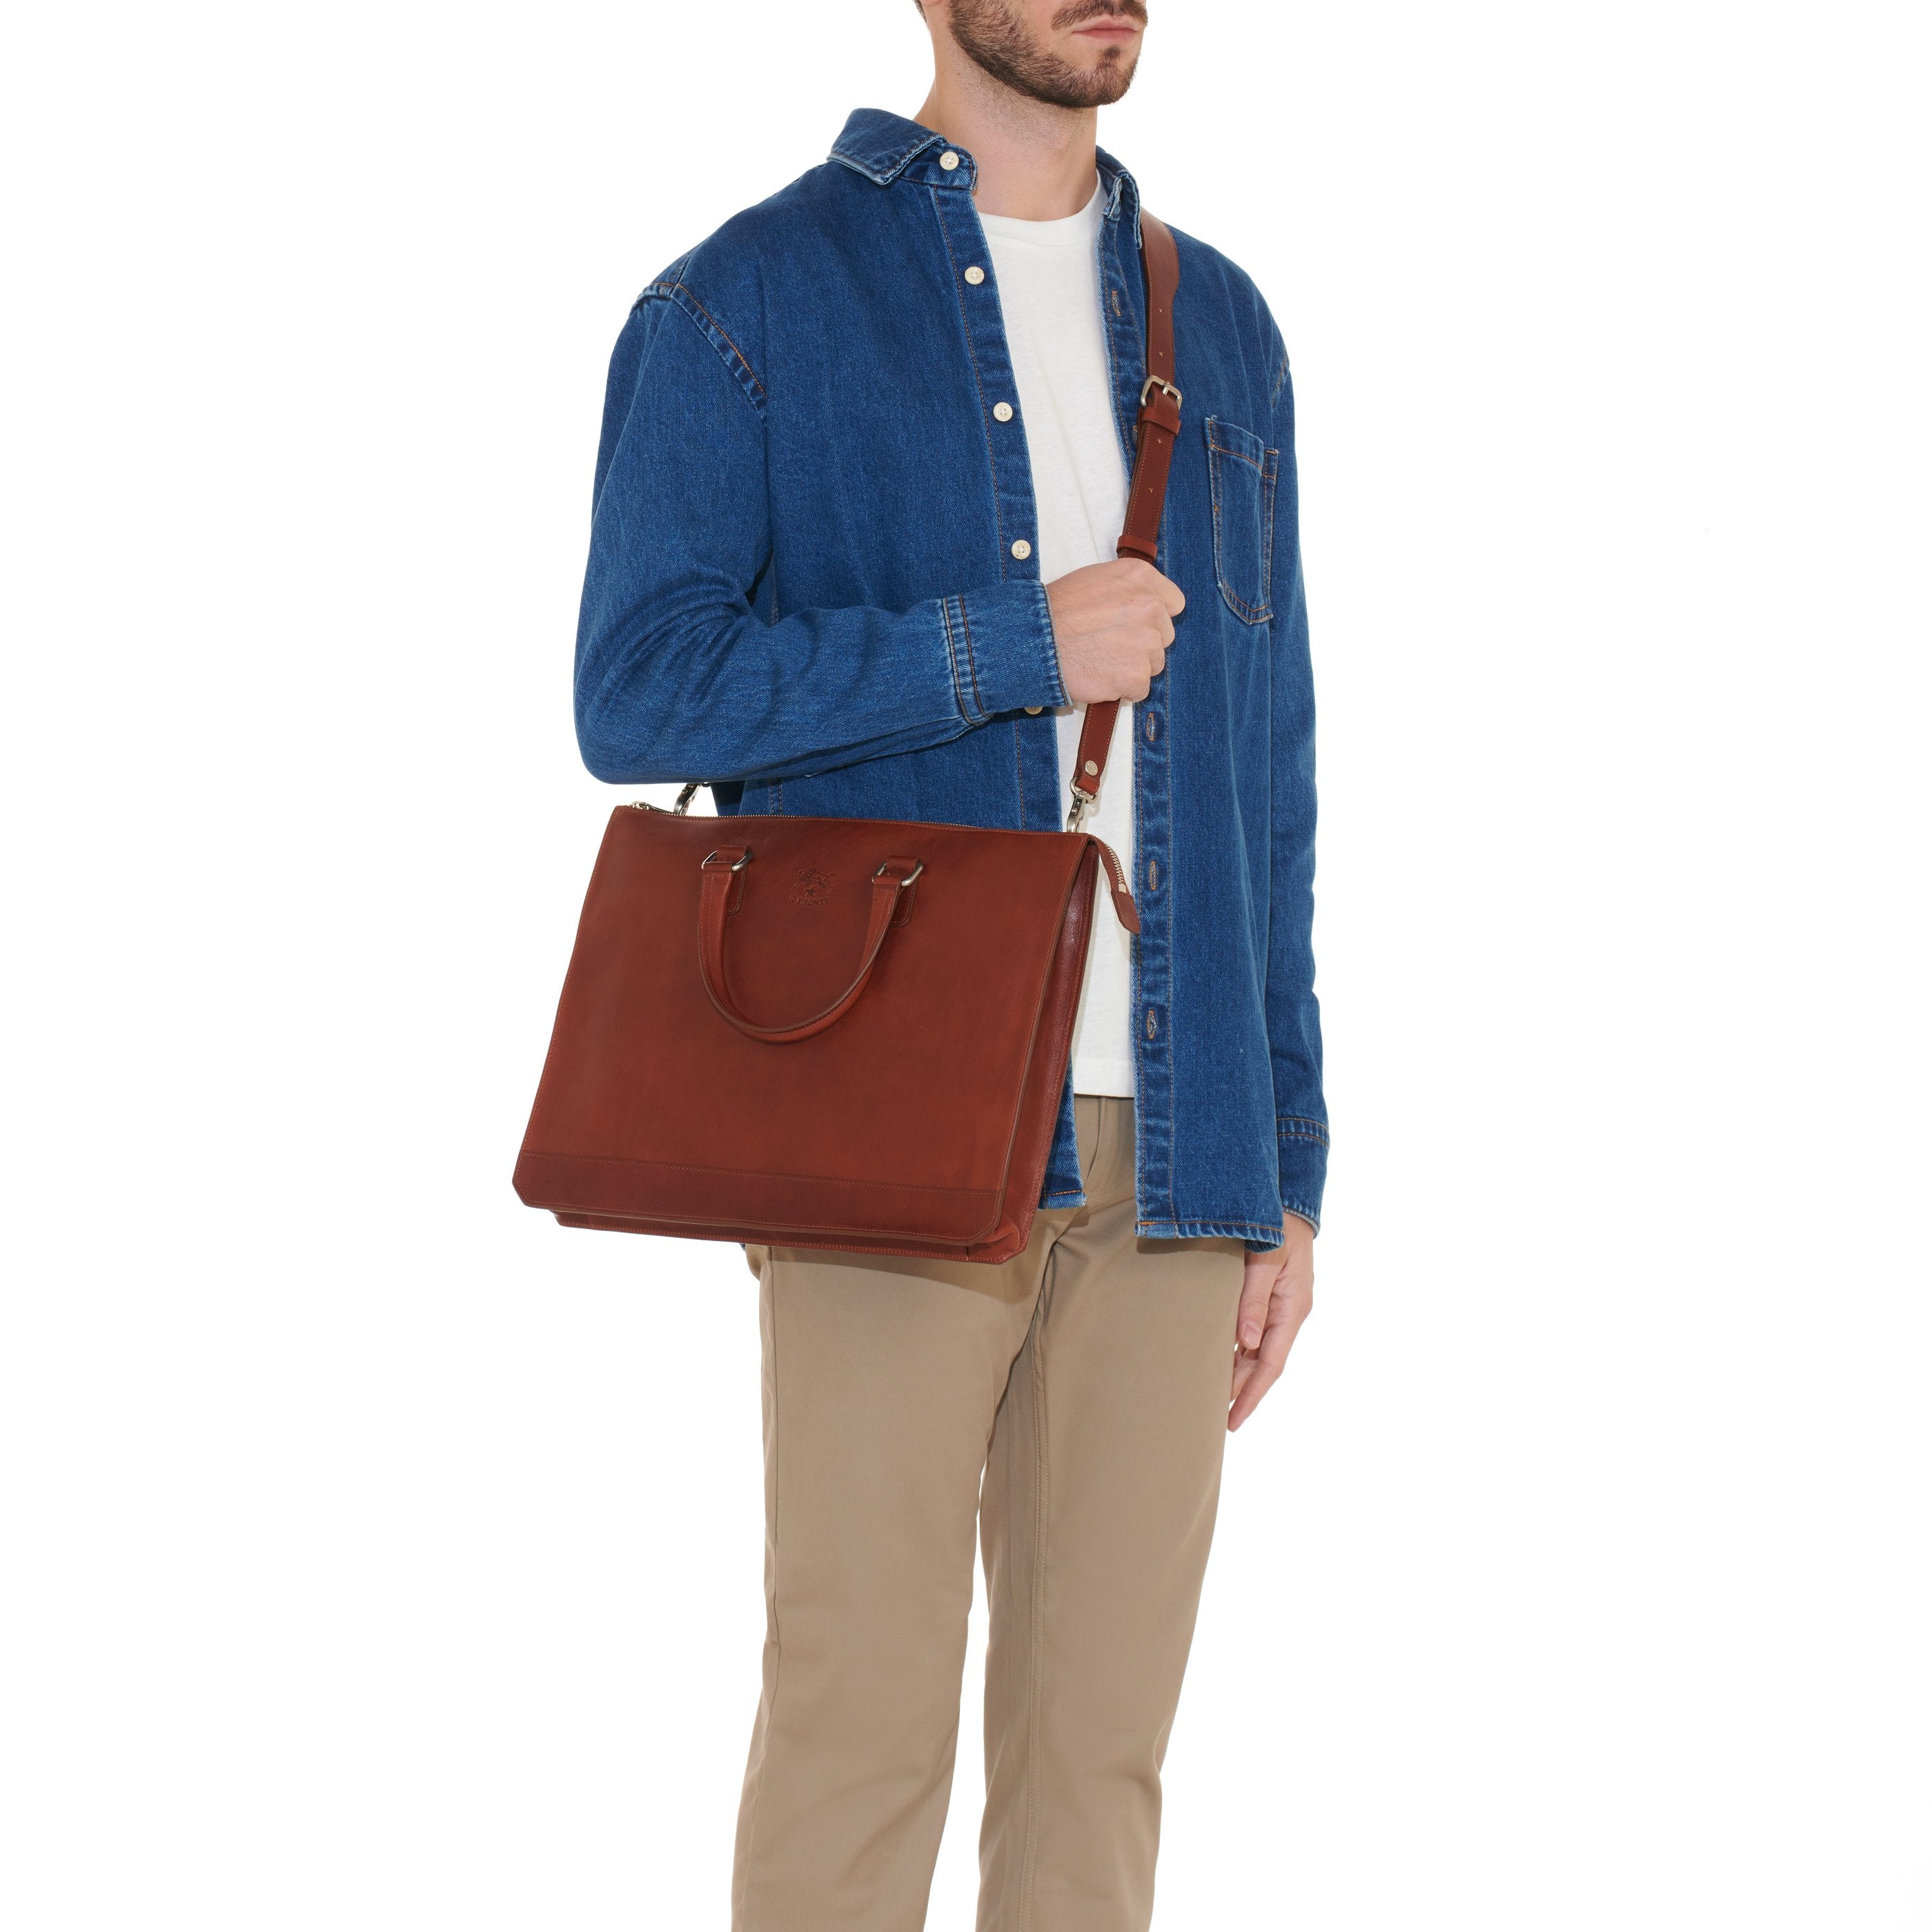 Meleto | Men's briefcase in vintage leather color sepia